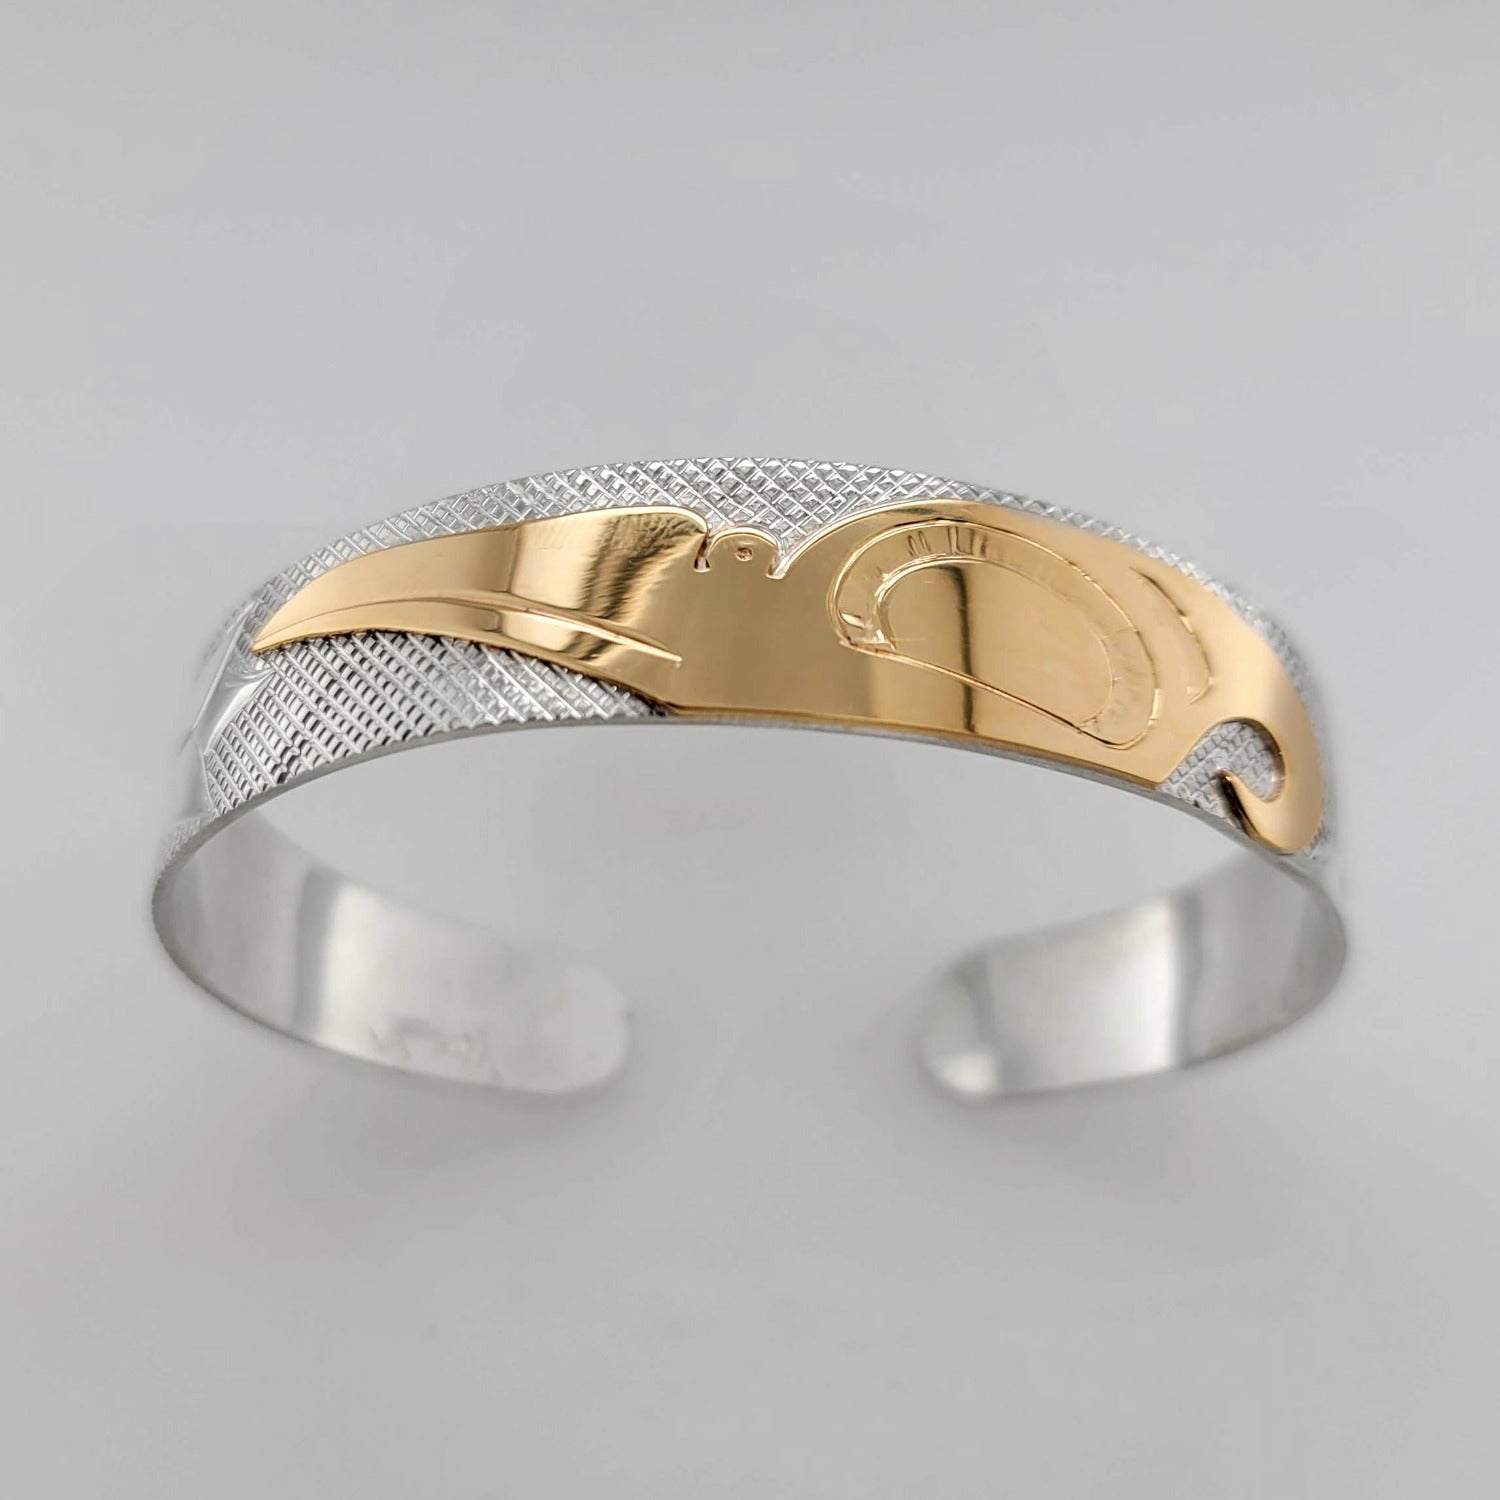 Silver & Gold Hummingbird Bracelet by Justin Rivard, Cree